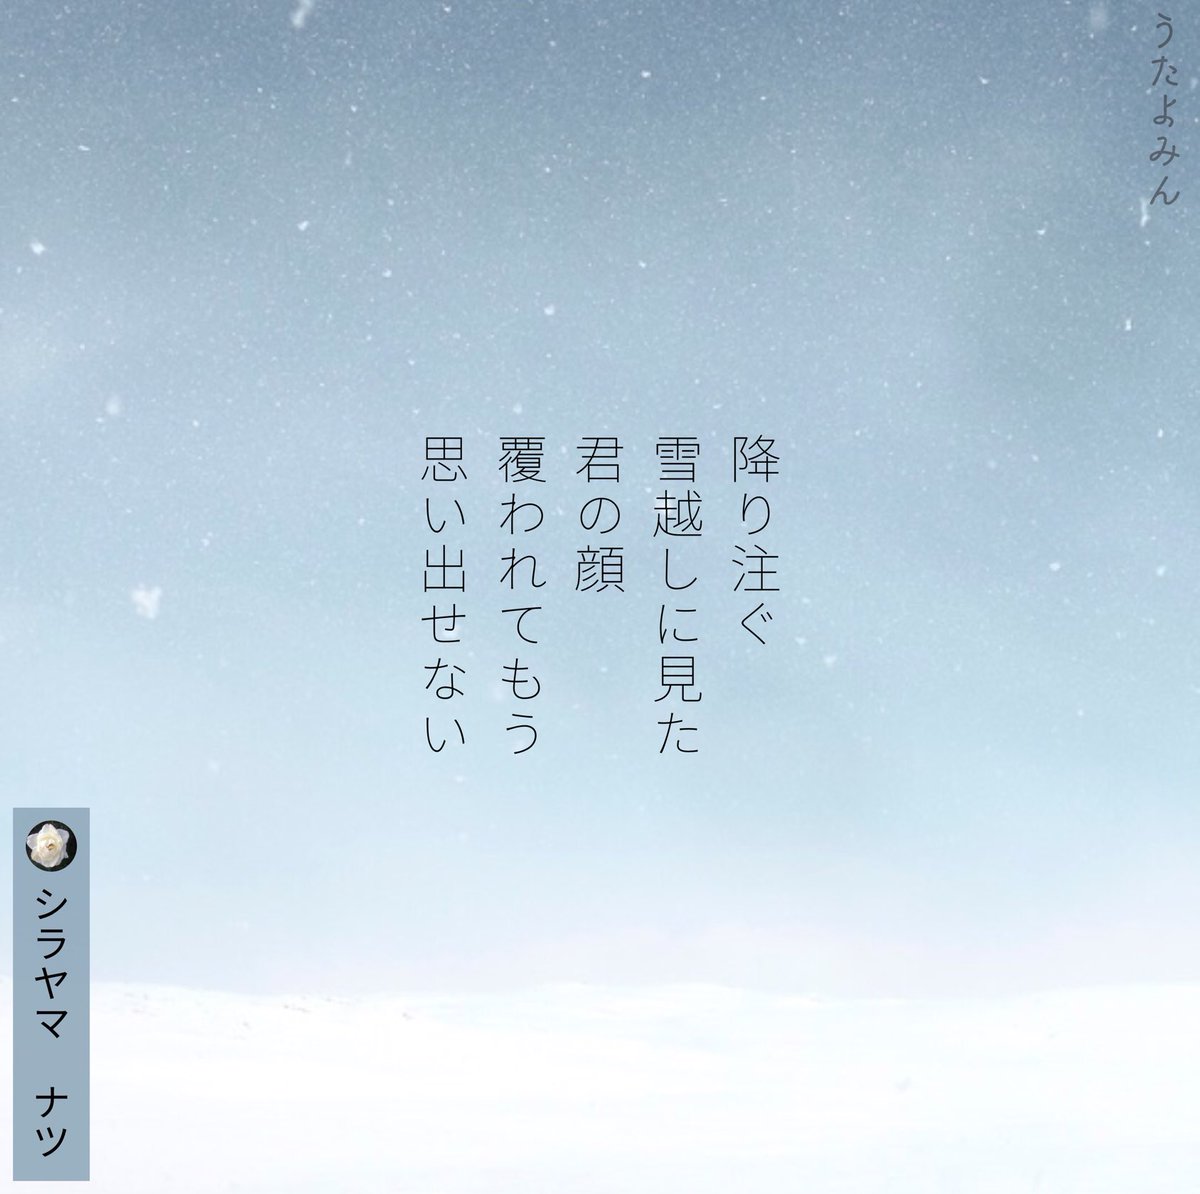 توییتر Shirayamanatsu シラヤマ ナツ در توییتر 降り注ぐ 雪越しに見た 君の顔 覆われてもう 思い出せない シラヤマ ナツ T Co Xj2ahibxwo 短歌 詩 短歌好きな人と繋がりたい 詩を書く人と繋がりたい 詩歌 片思い 片想い 恋 ポエム 恋愛 青春